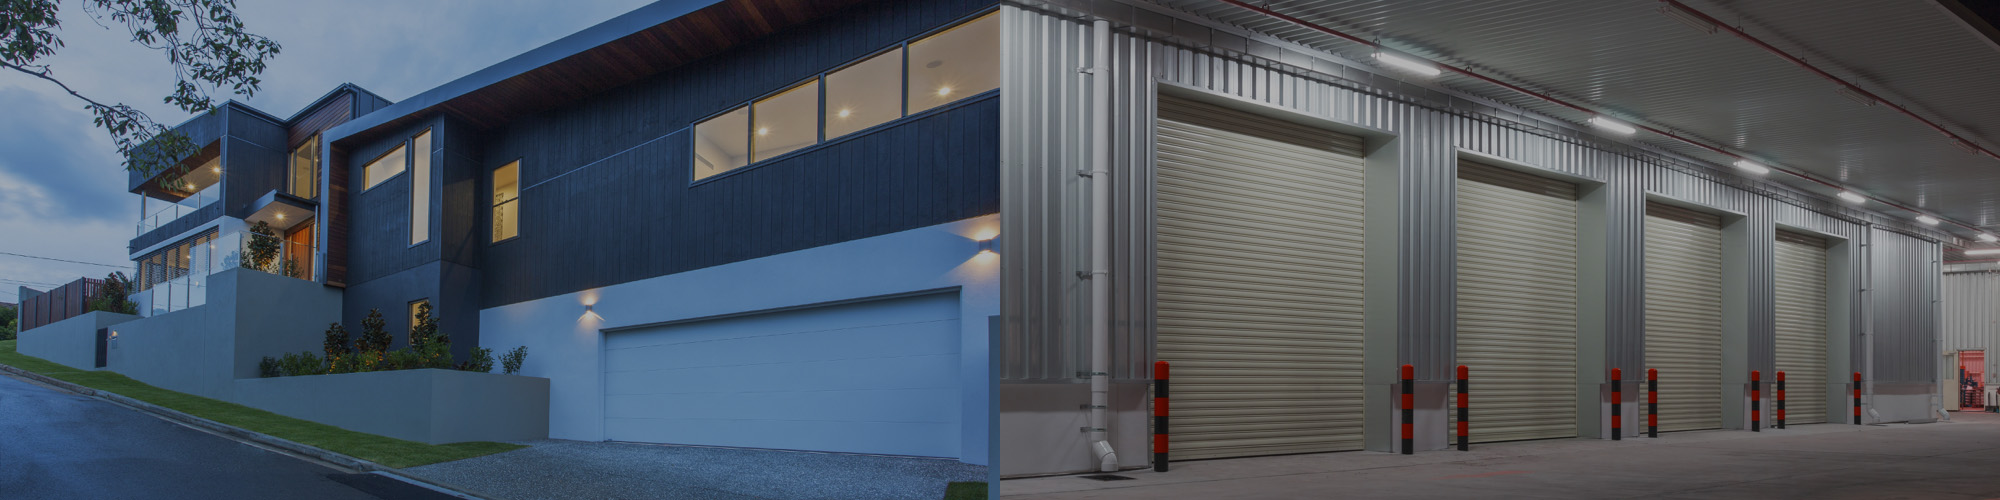 Modern Garage Door Screens Home Depot Canada for Simple Design